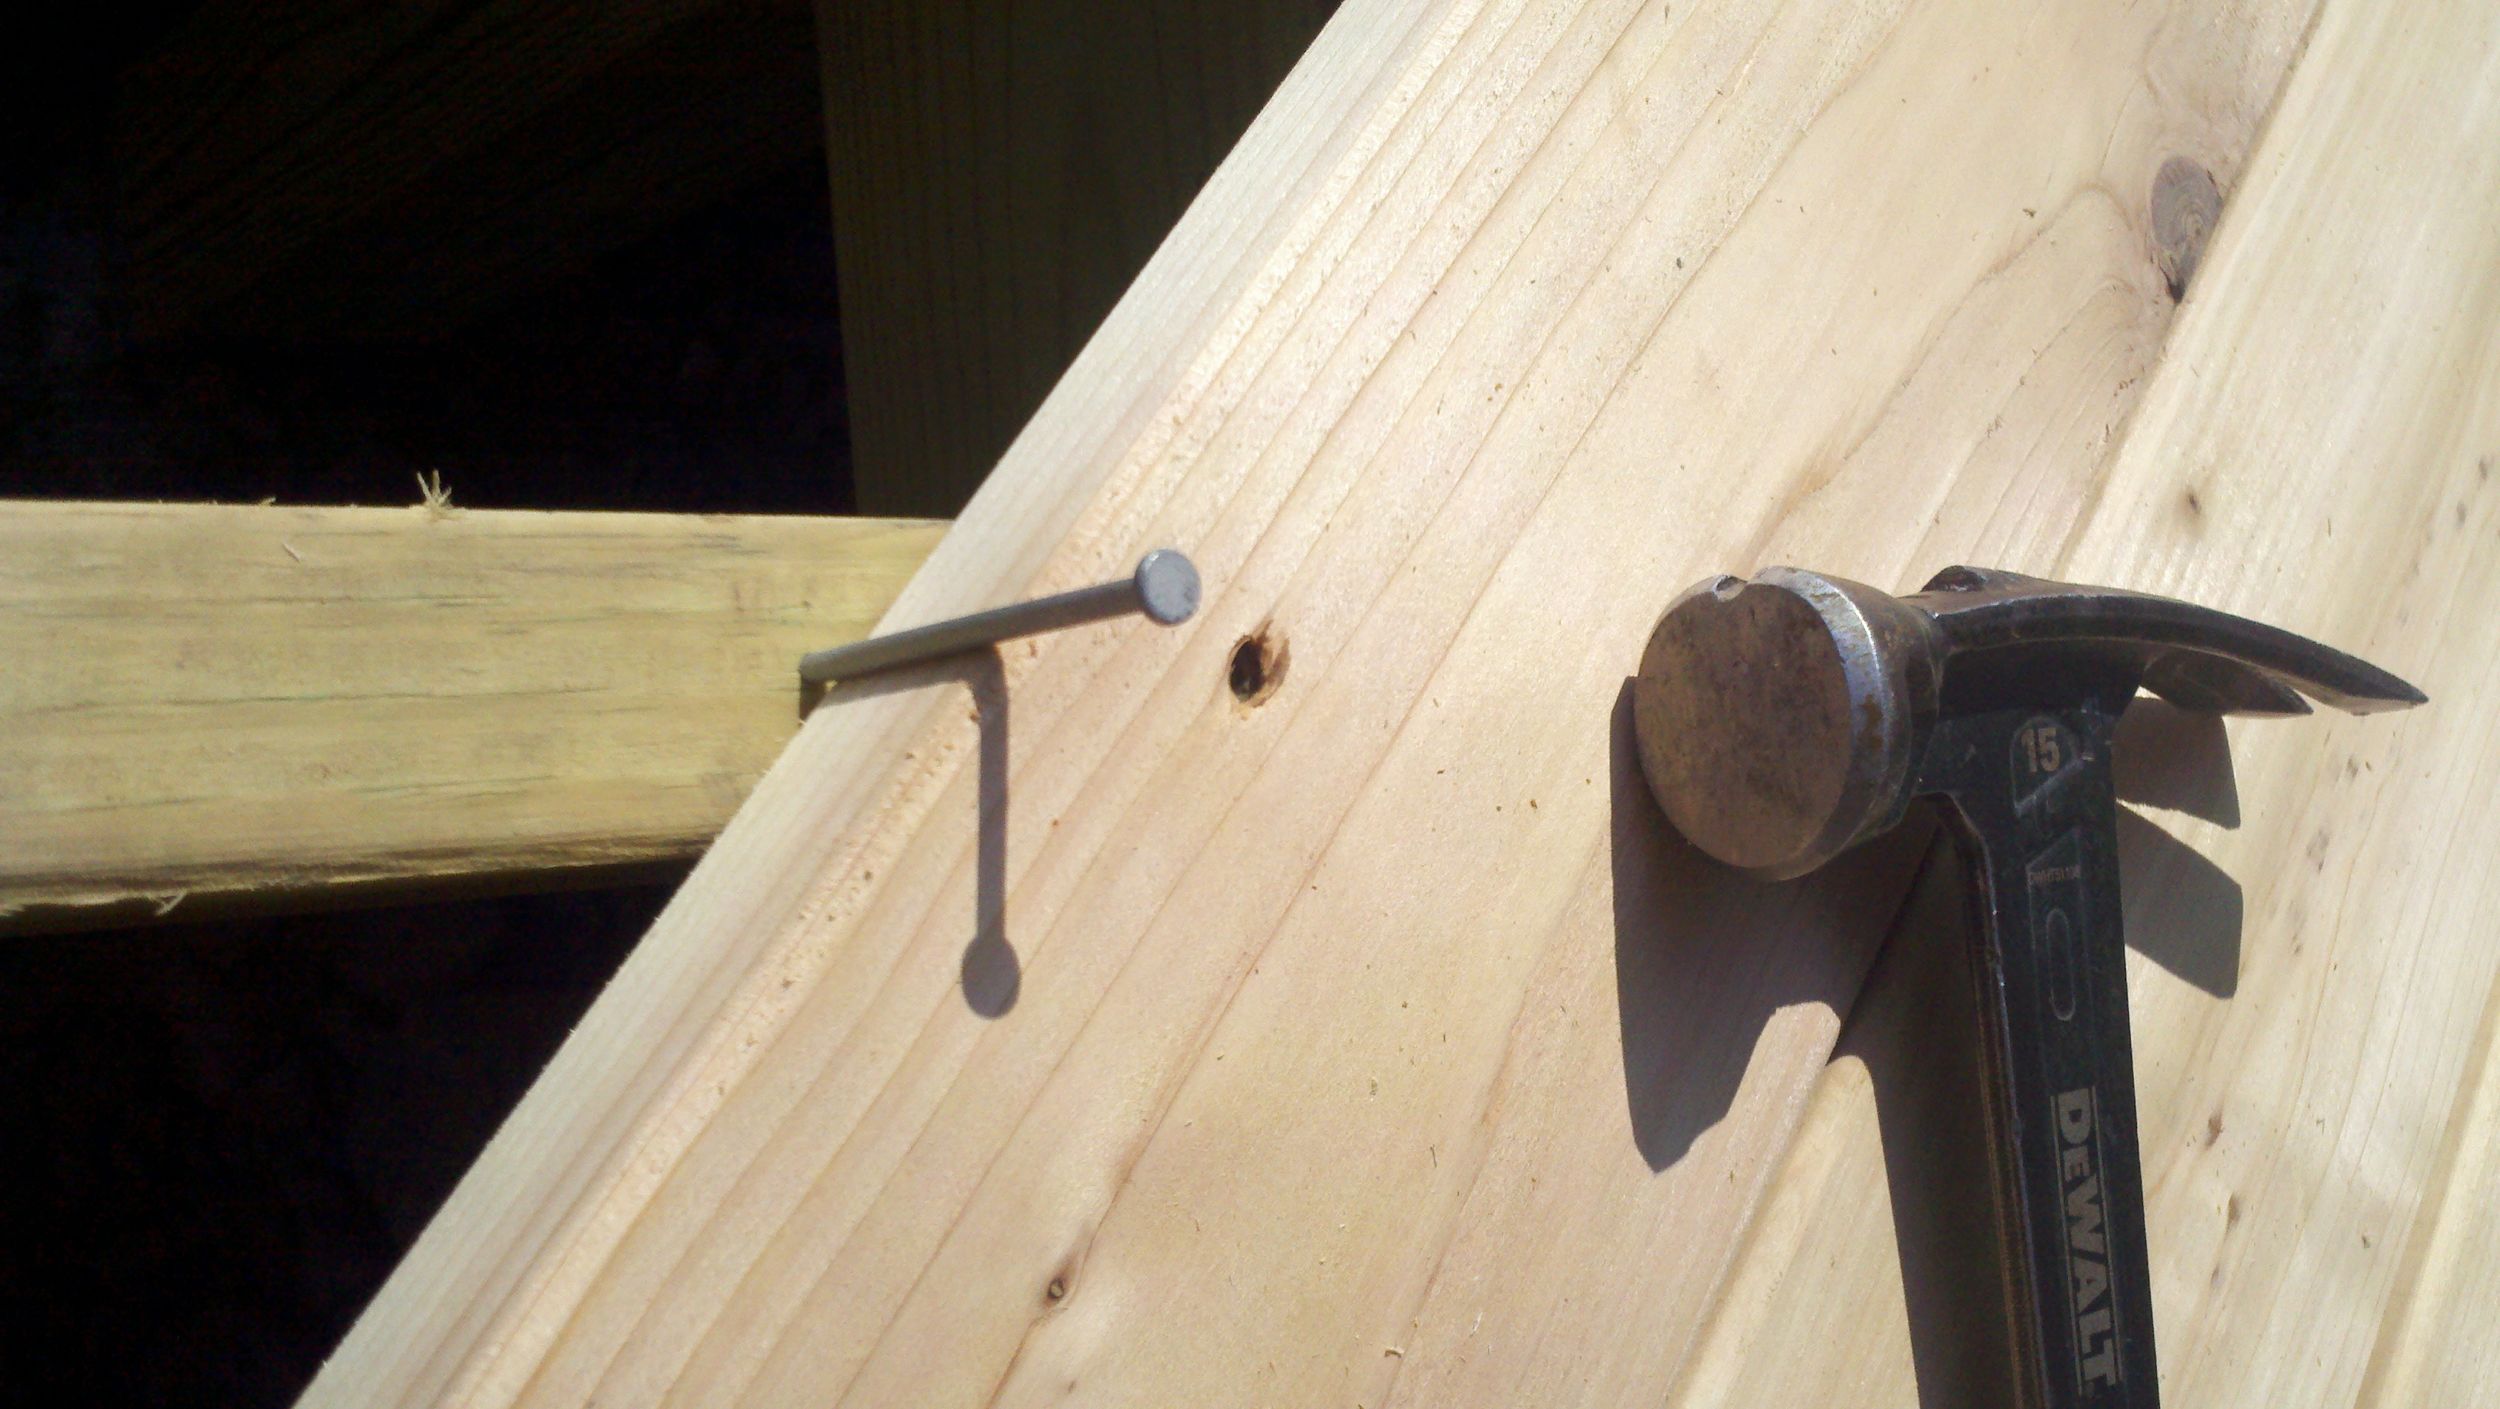 Spacer nail for cedar decking.